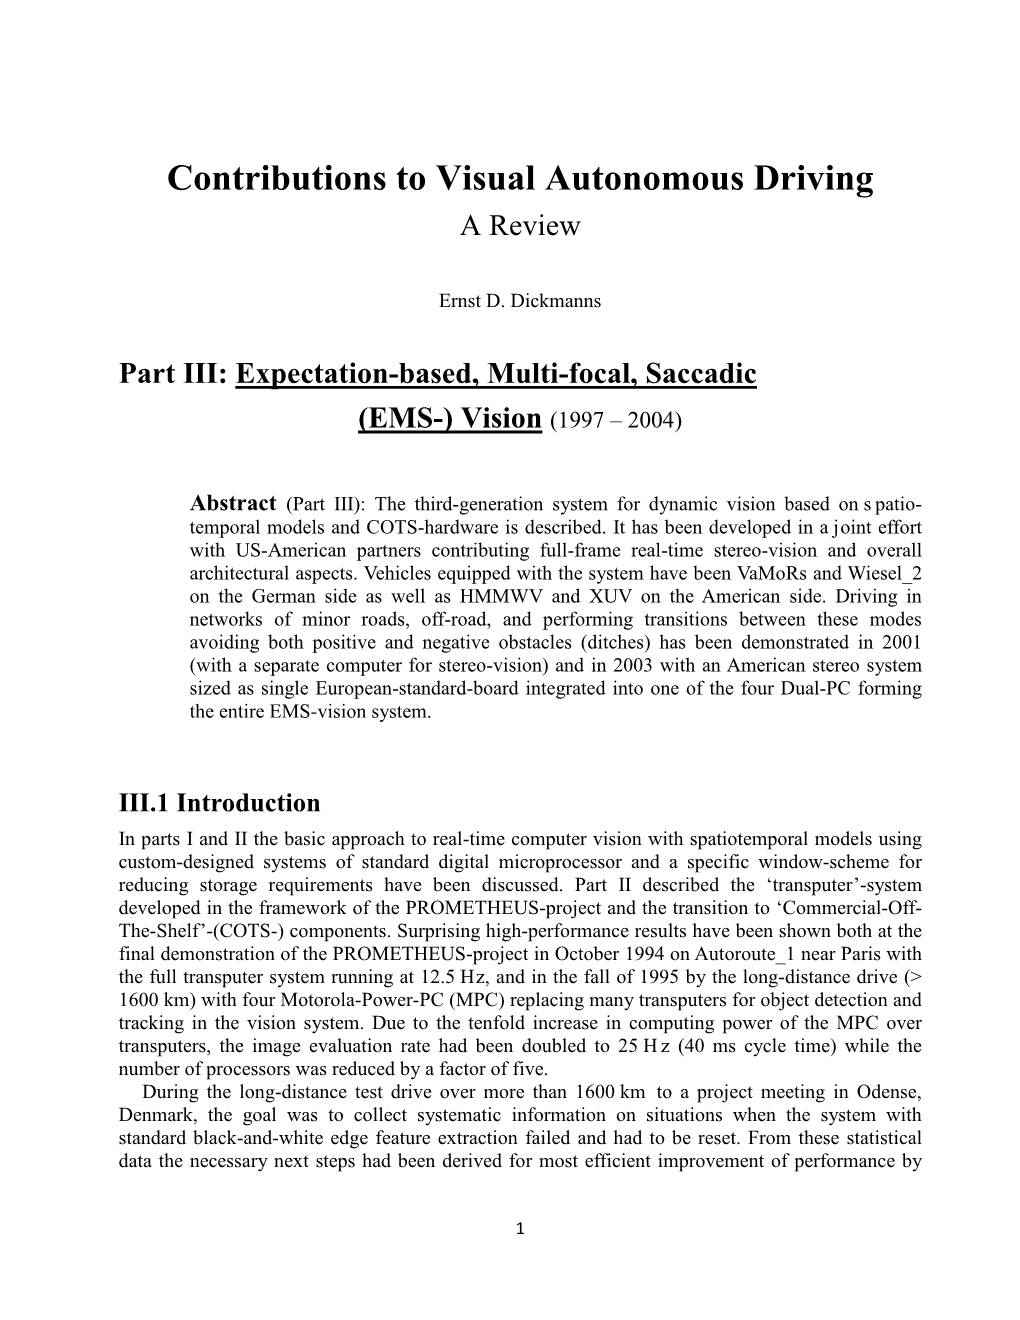 Contributions to Visual Autonomous Driving a Review